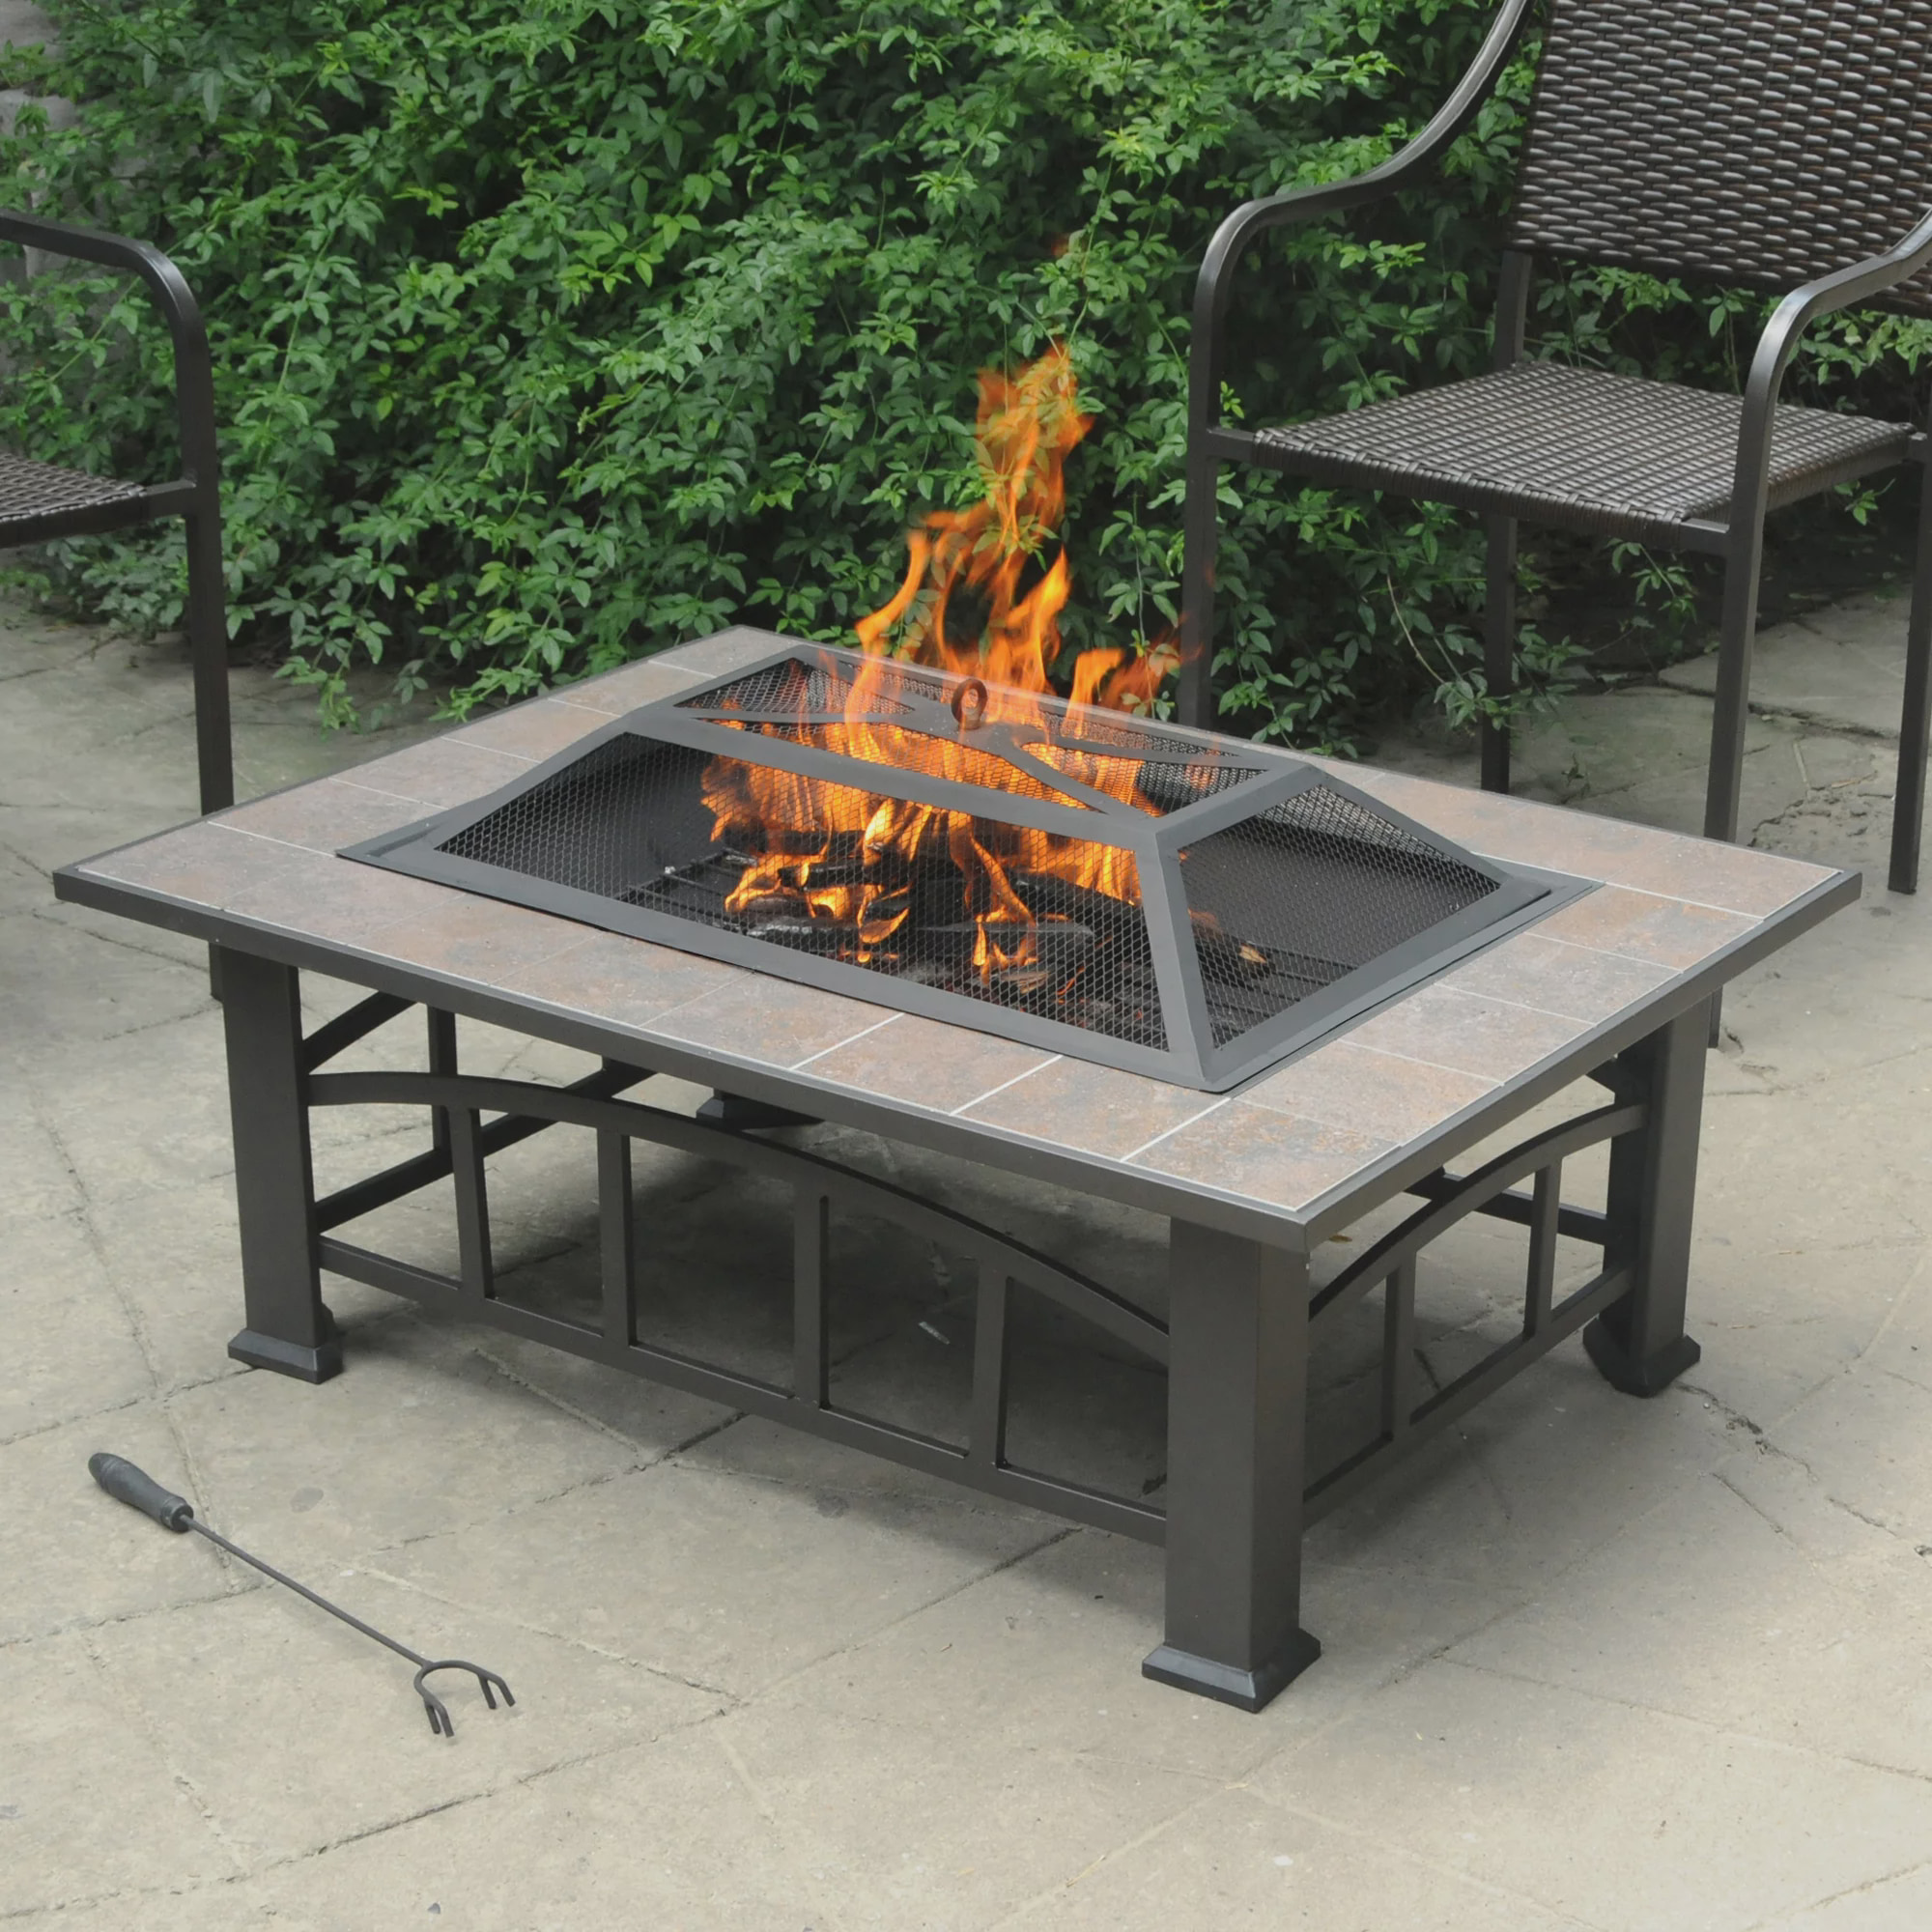 Axxonn Rectangular Tile Top Fire Pit, Brownish Bronze (37" x 28") wood burning Fire Bowl - $48.98